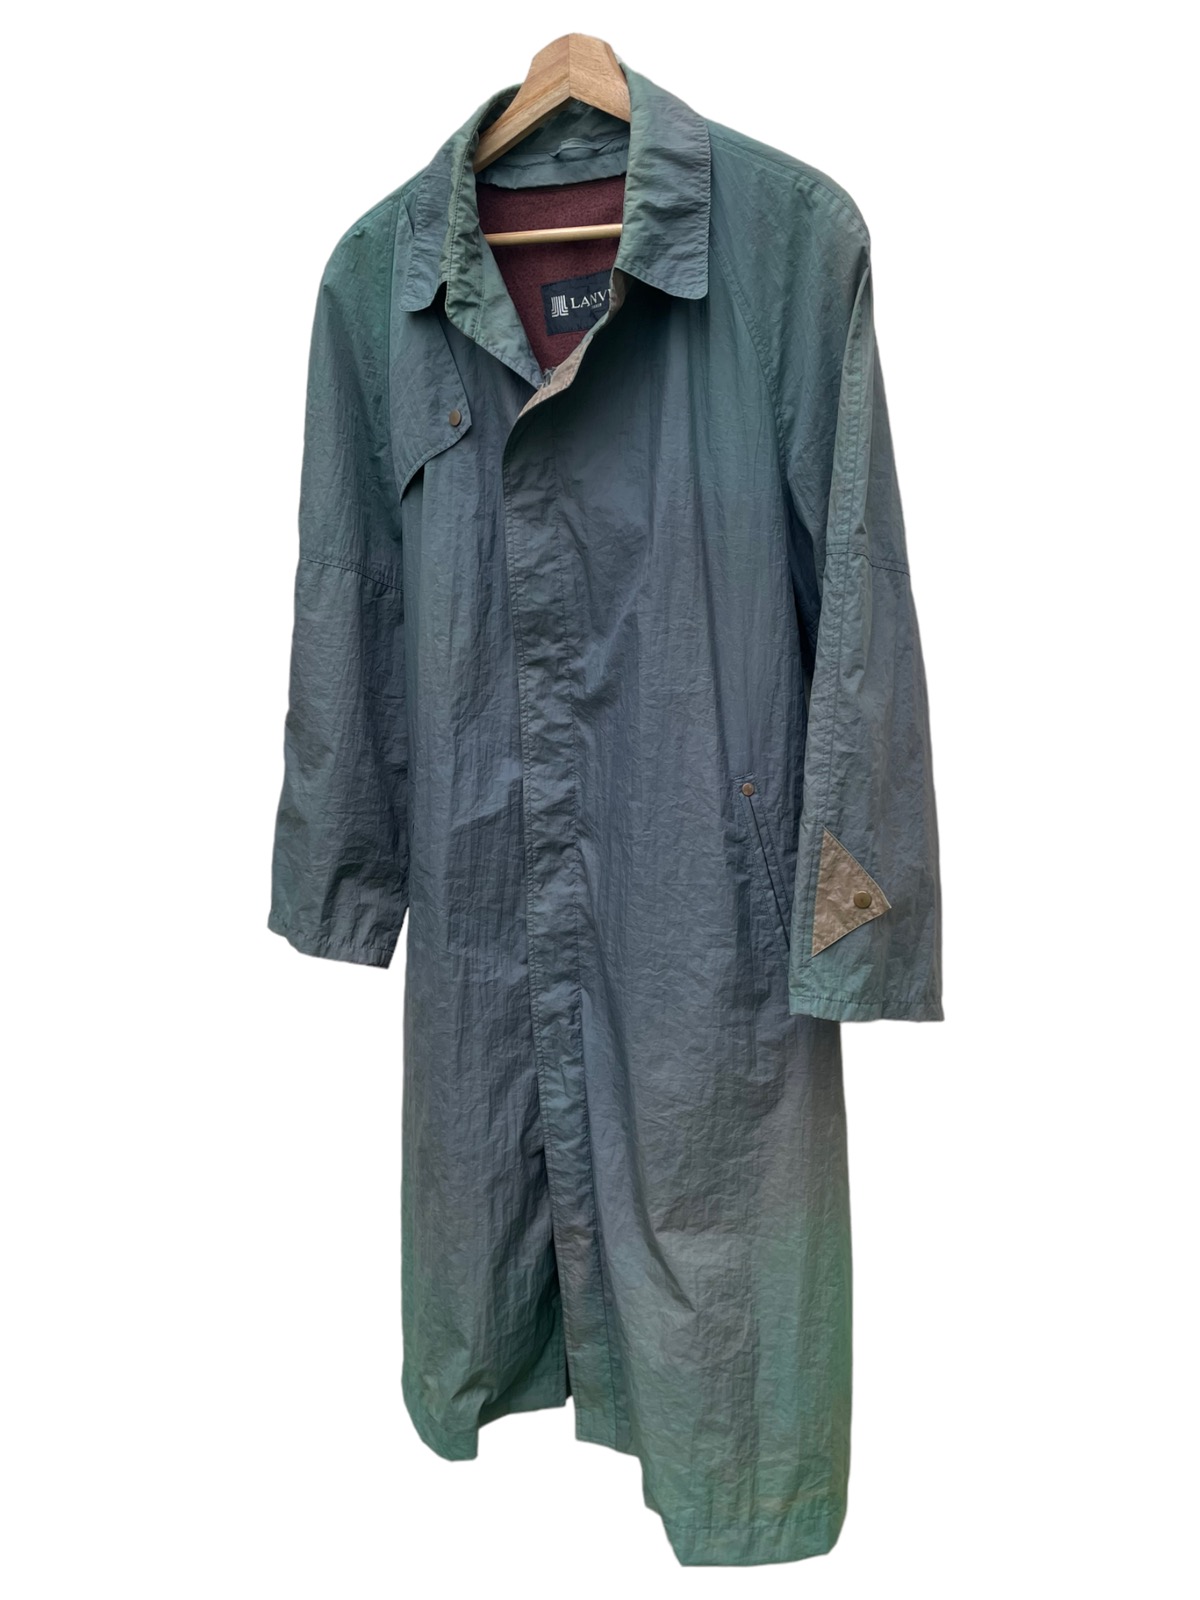 💥 LANVIN PARIS Trench Coat Long Coat Jacket - 4